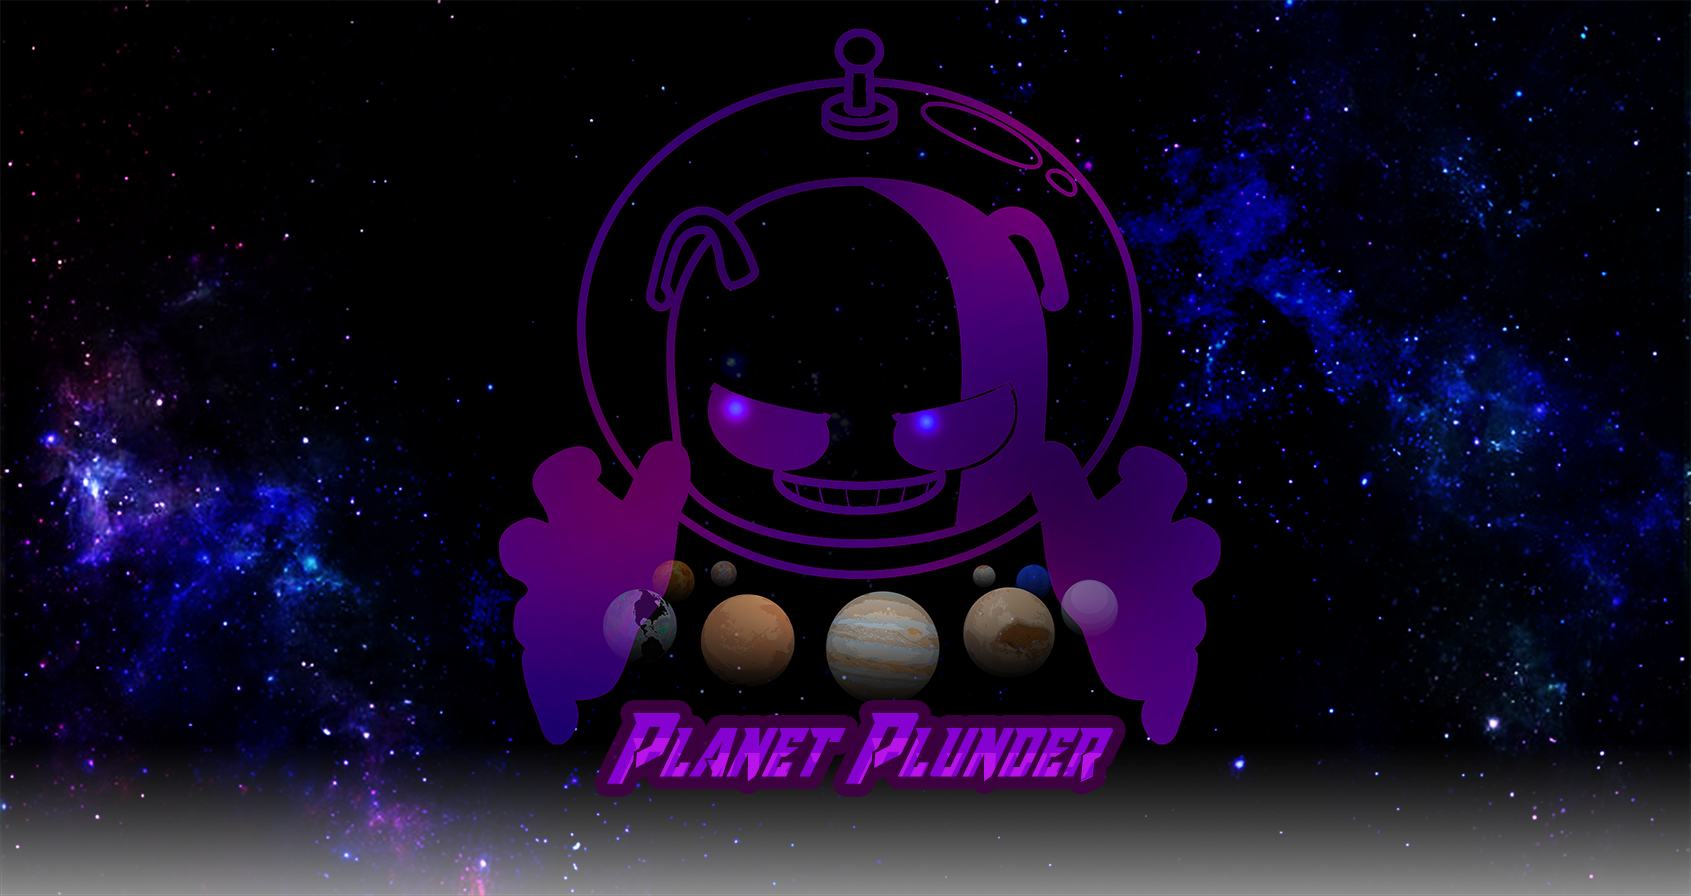 Planet Plunder